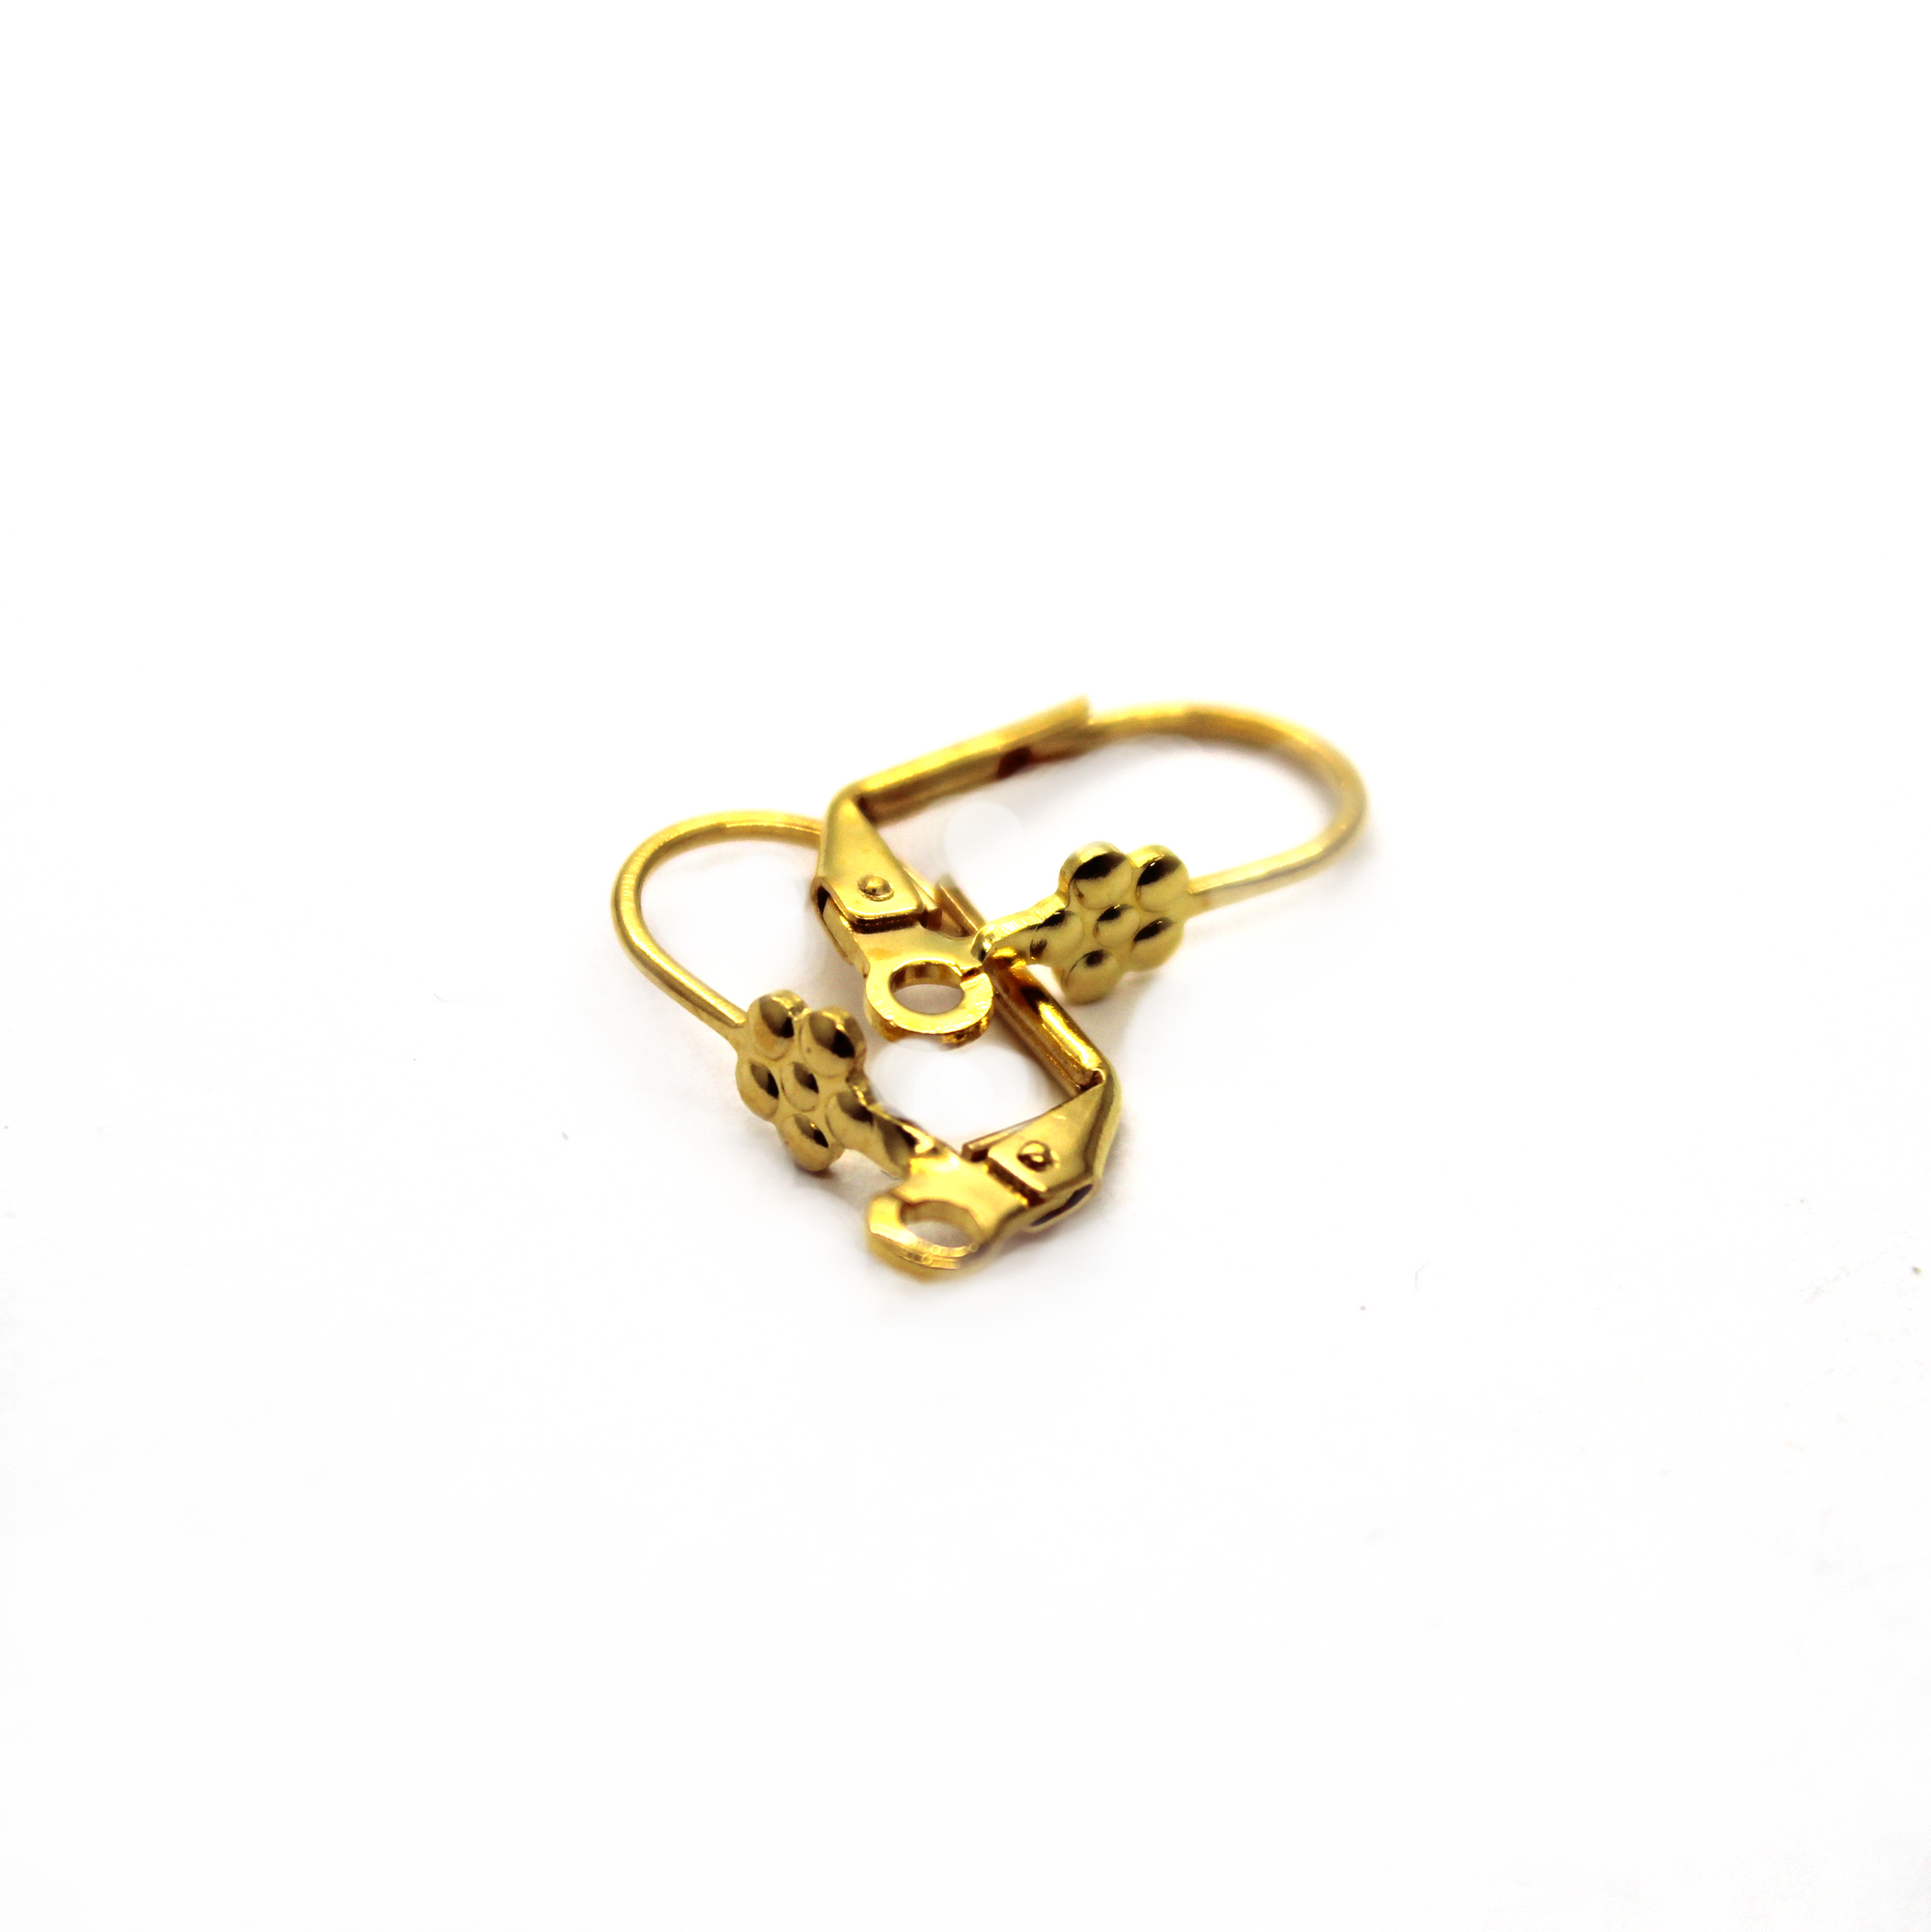 Earrings, Gold, Alloy, Flower Leverback Earrings, 20mm x 10mm, Sold per pkg of 3 pairs